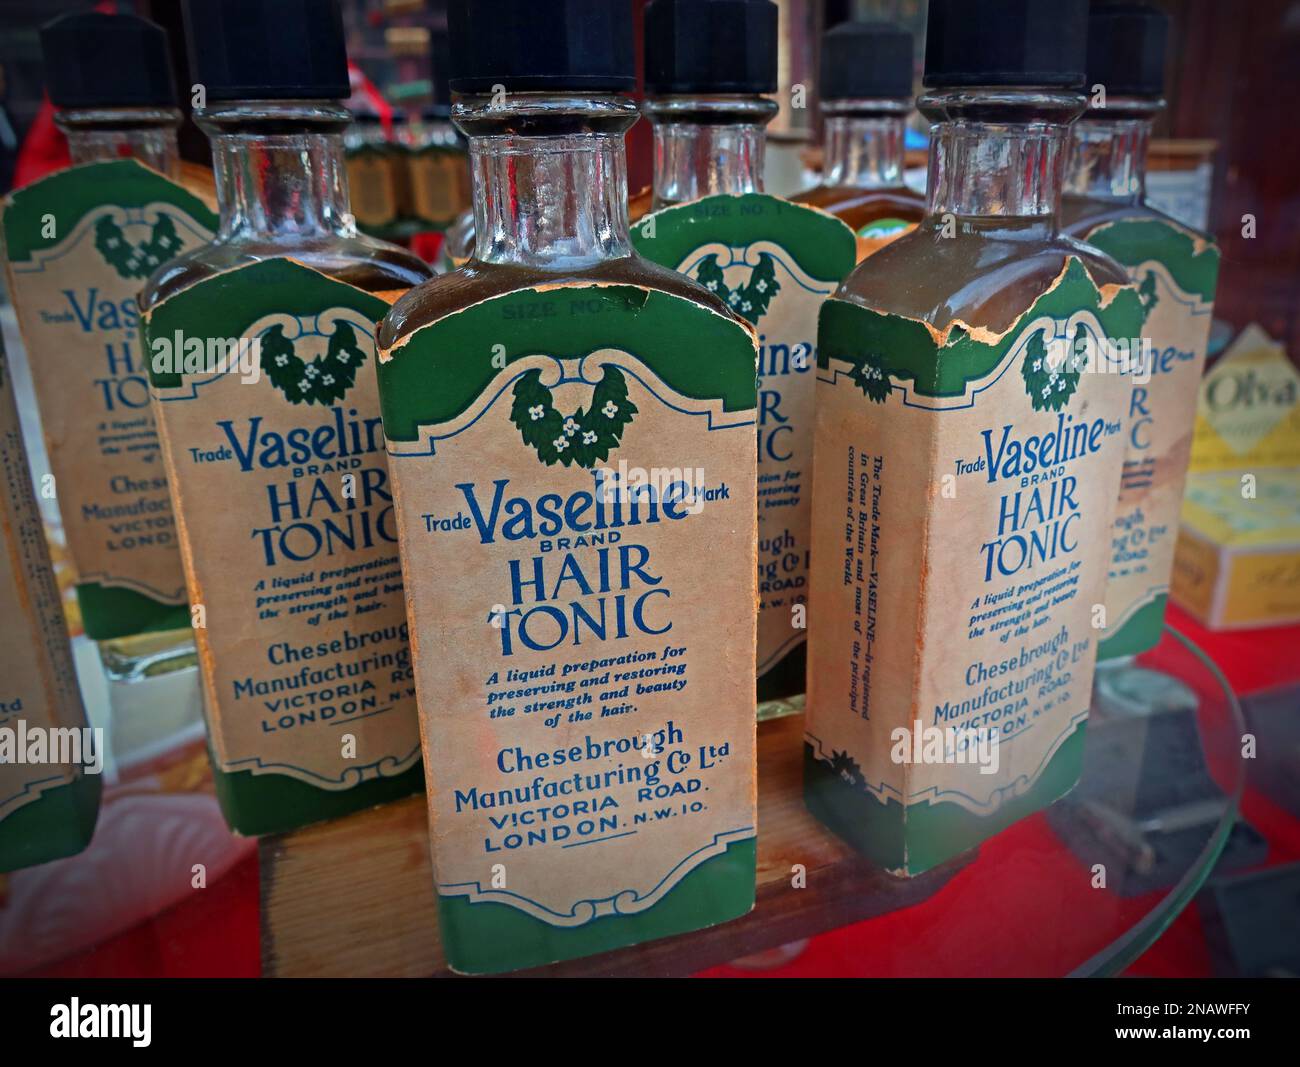 Old Bottles of medicinal Vaseline Brand (Handelsmarke) hair Tonic, Cheesebrough Manufacturing Co Ltd, Victoria Road, London NW10, England, Vereinigtes Königreich Stockfoto